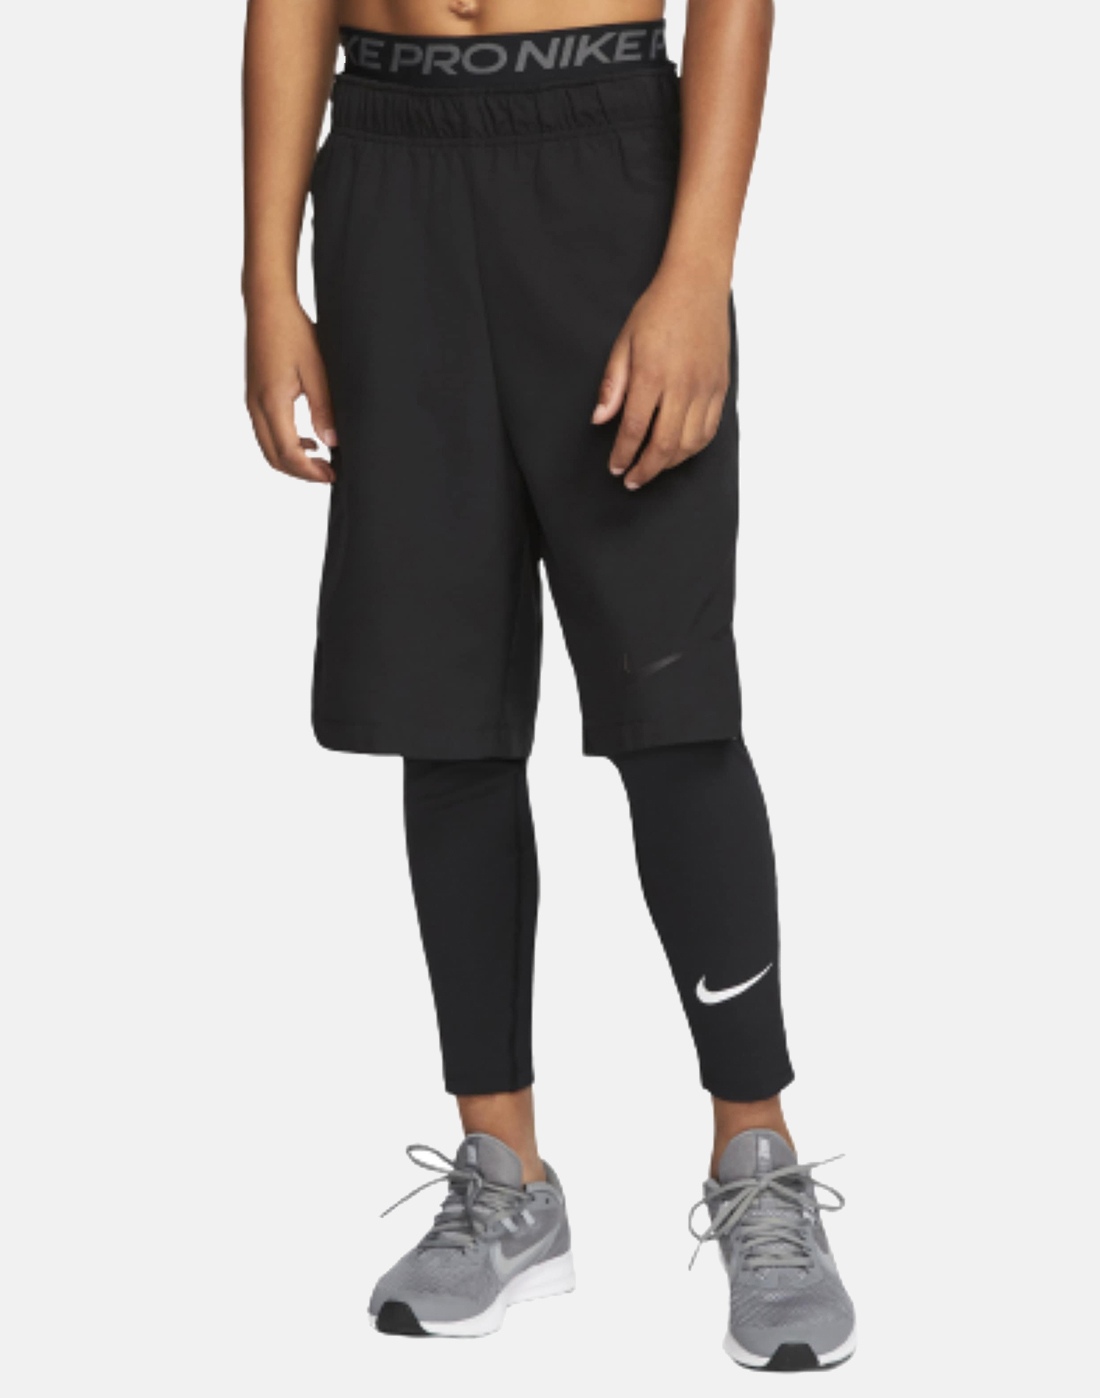 Nike Older Boys Pro Leggings - Black | Life Style Sports UK